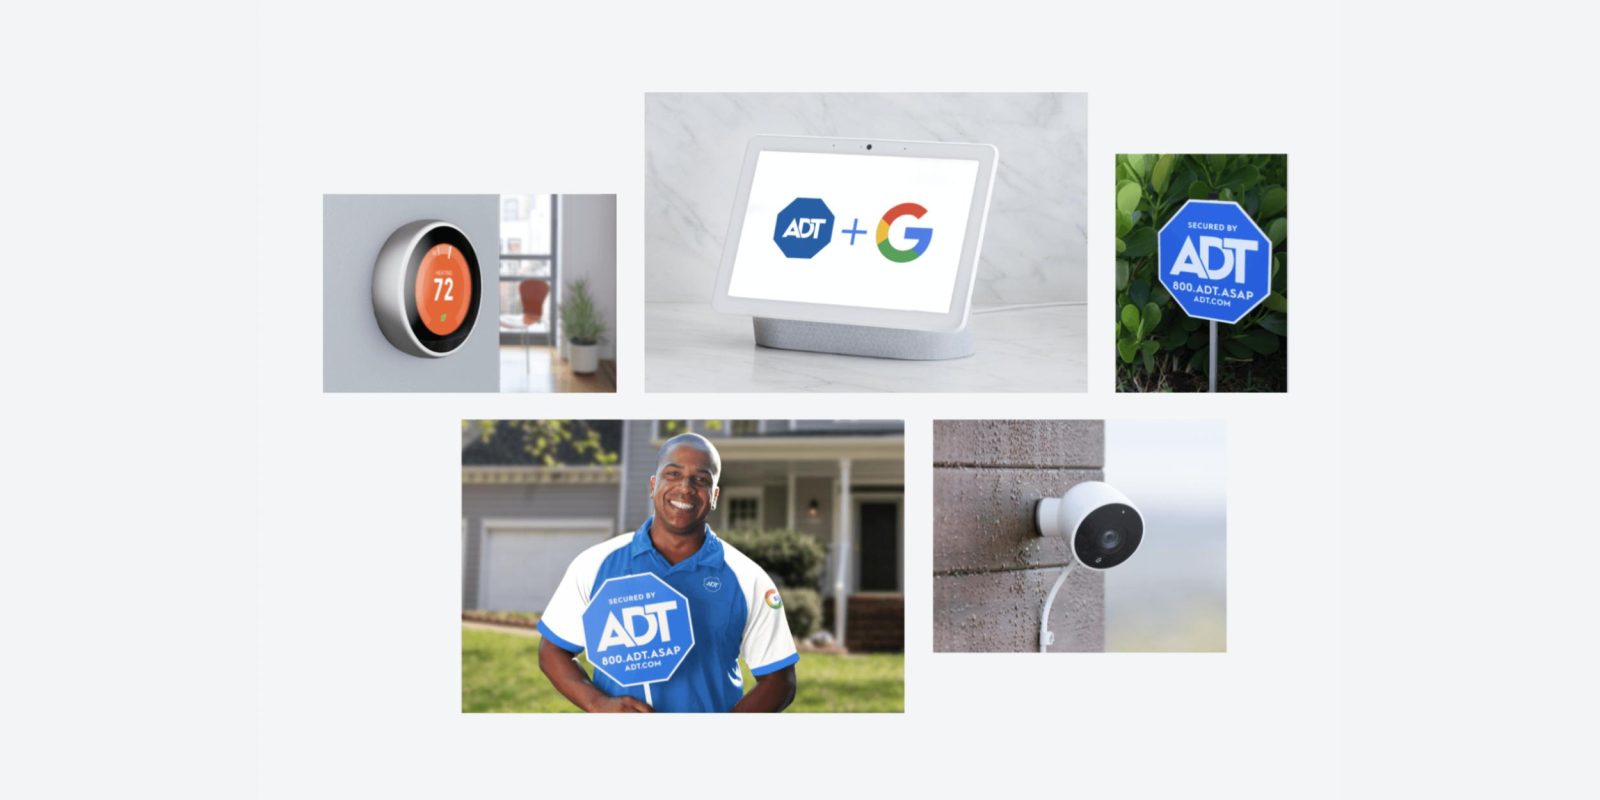 Google ADT partnership